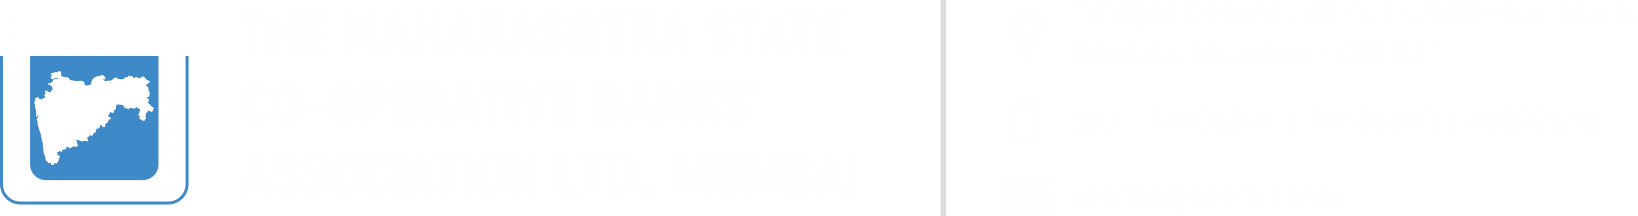 THE MAHARASHTRA STATE CO-OPERATIVE BANKS’ ASSOCIATION LTD., MUMBAI